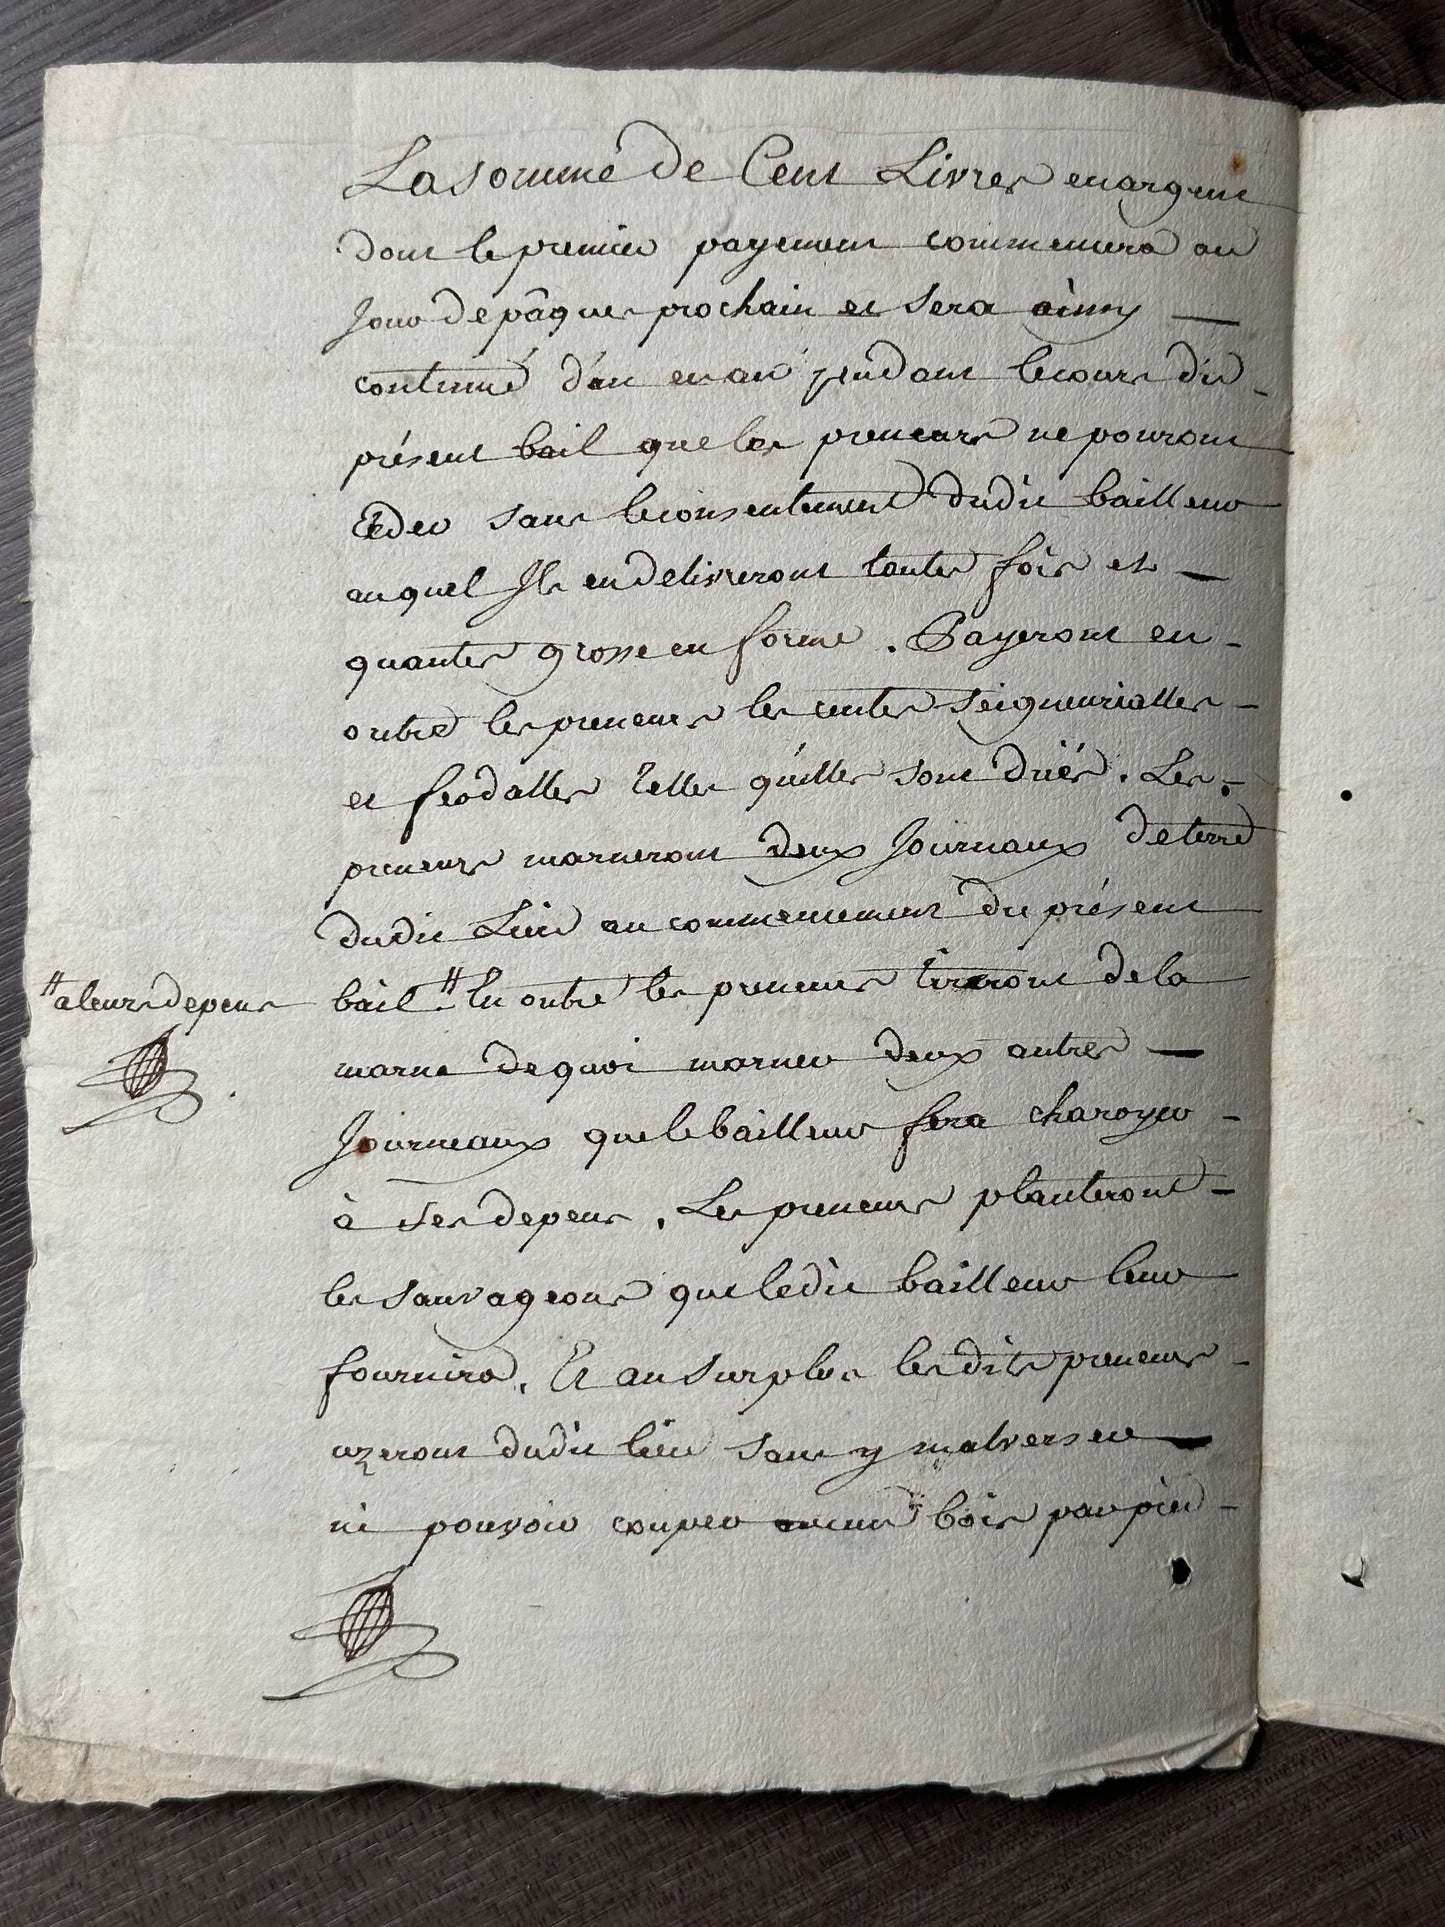 1779 French Manuscript